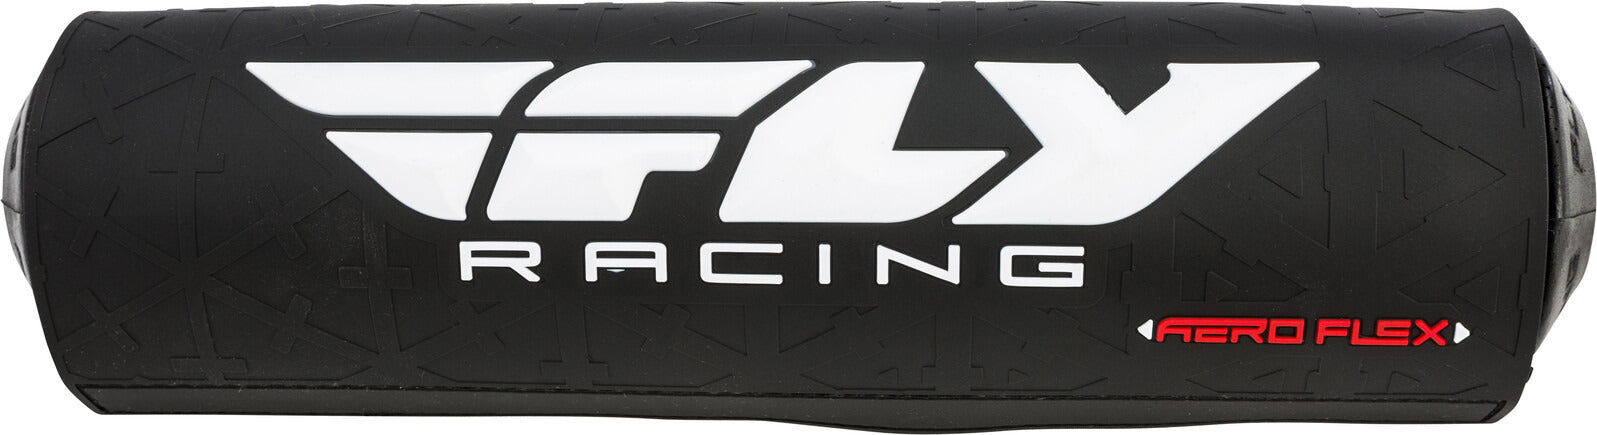 Fly Racing Aero Flex Handlebar Motorcycle Pad - Black